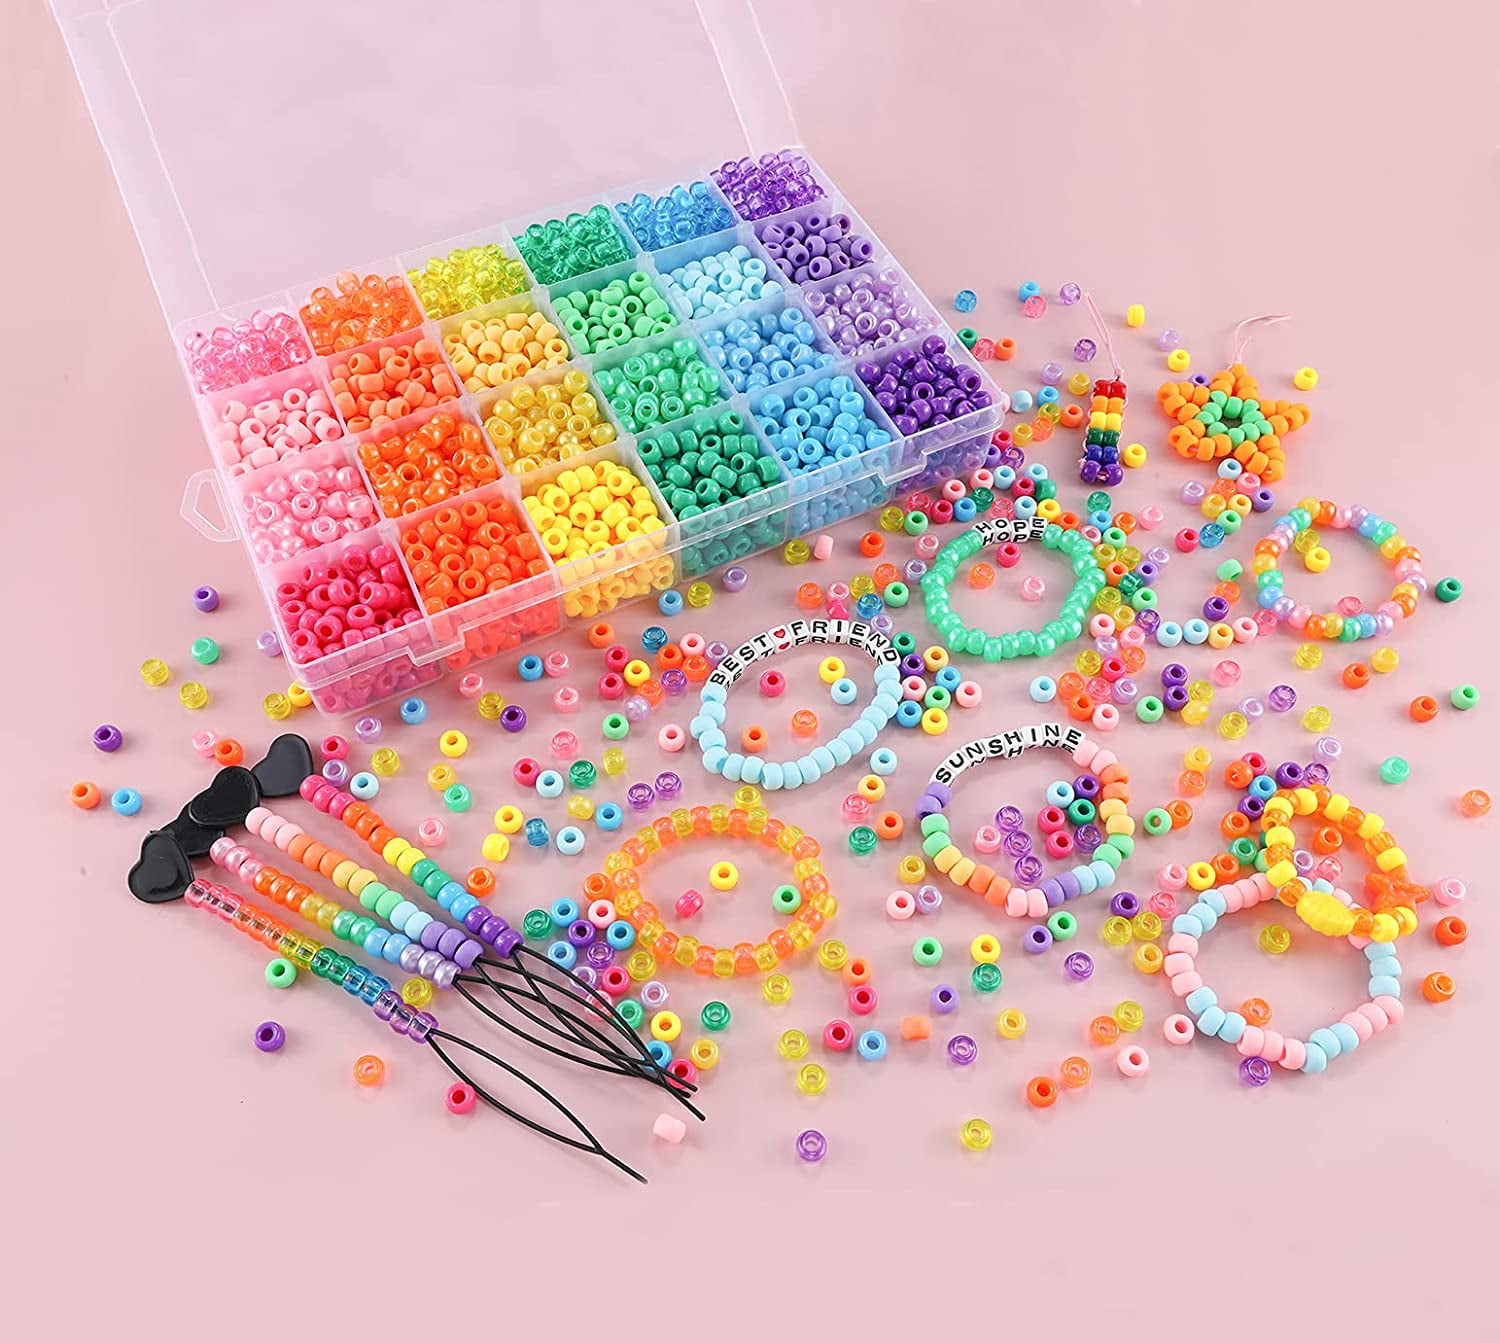 KOTHER 48 Colors Pony Beads for Bracelets Making Kit, Rainbow Friendship  Bracelet Kit with 1300pcs Letter Beads,with Elastic Strings Pony Beads Bulk